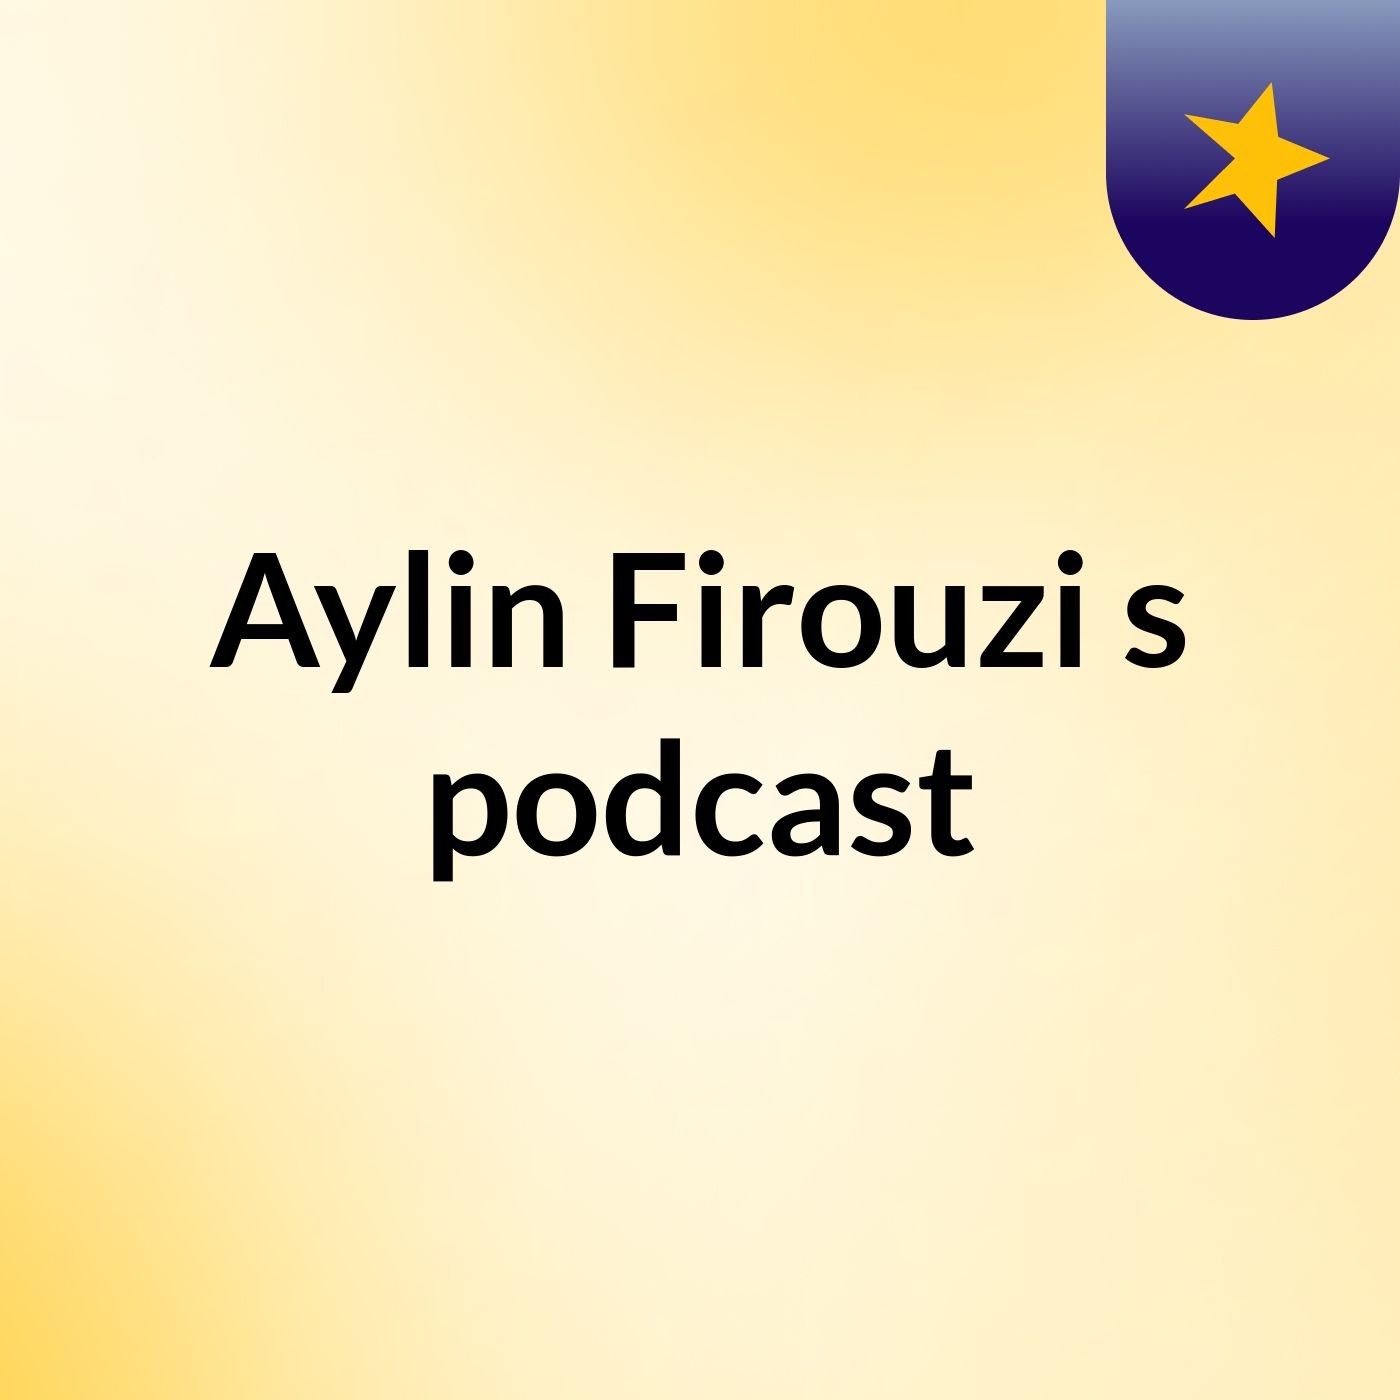 Aylin Firouzi's podcast